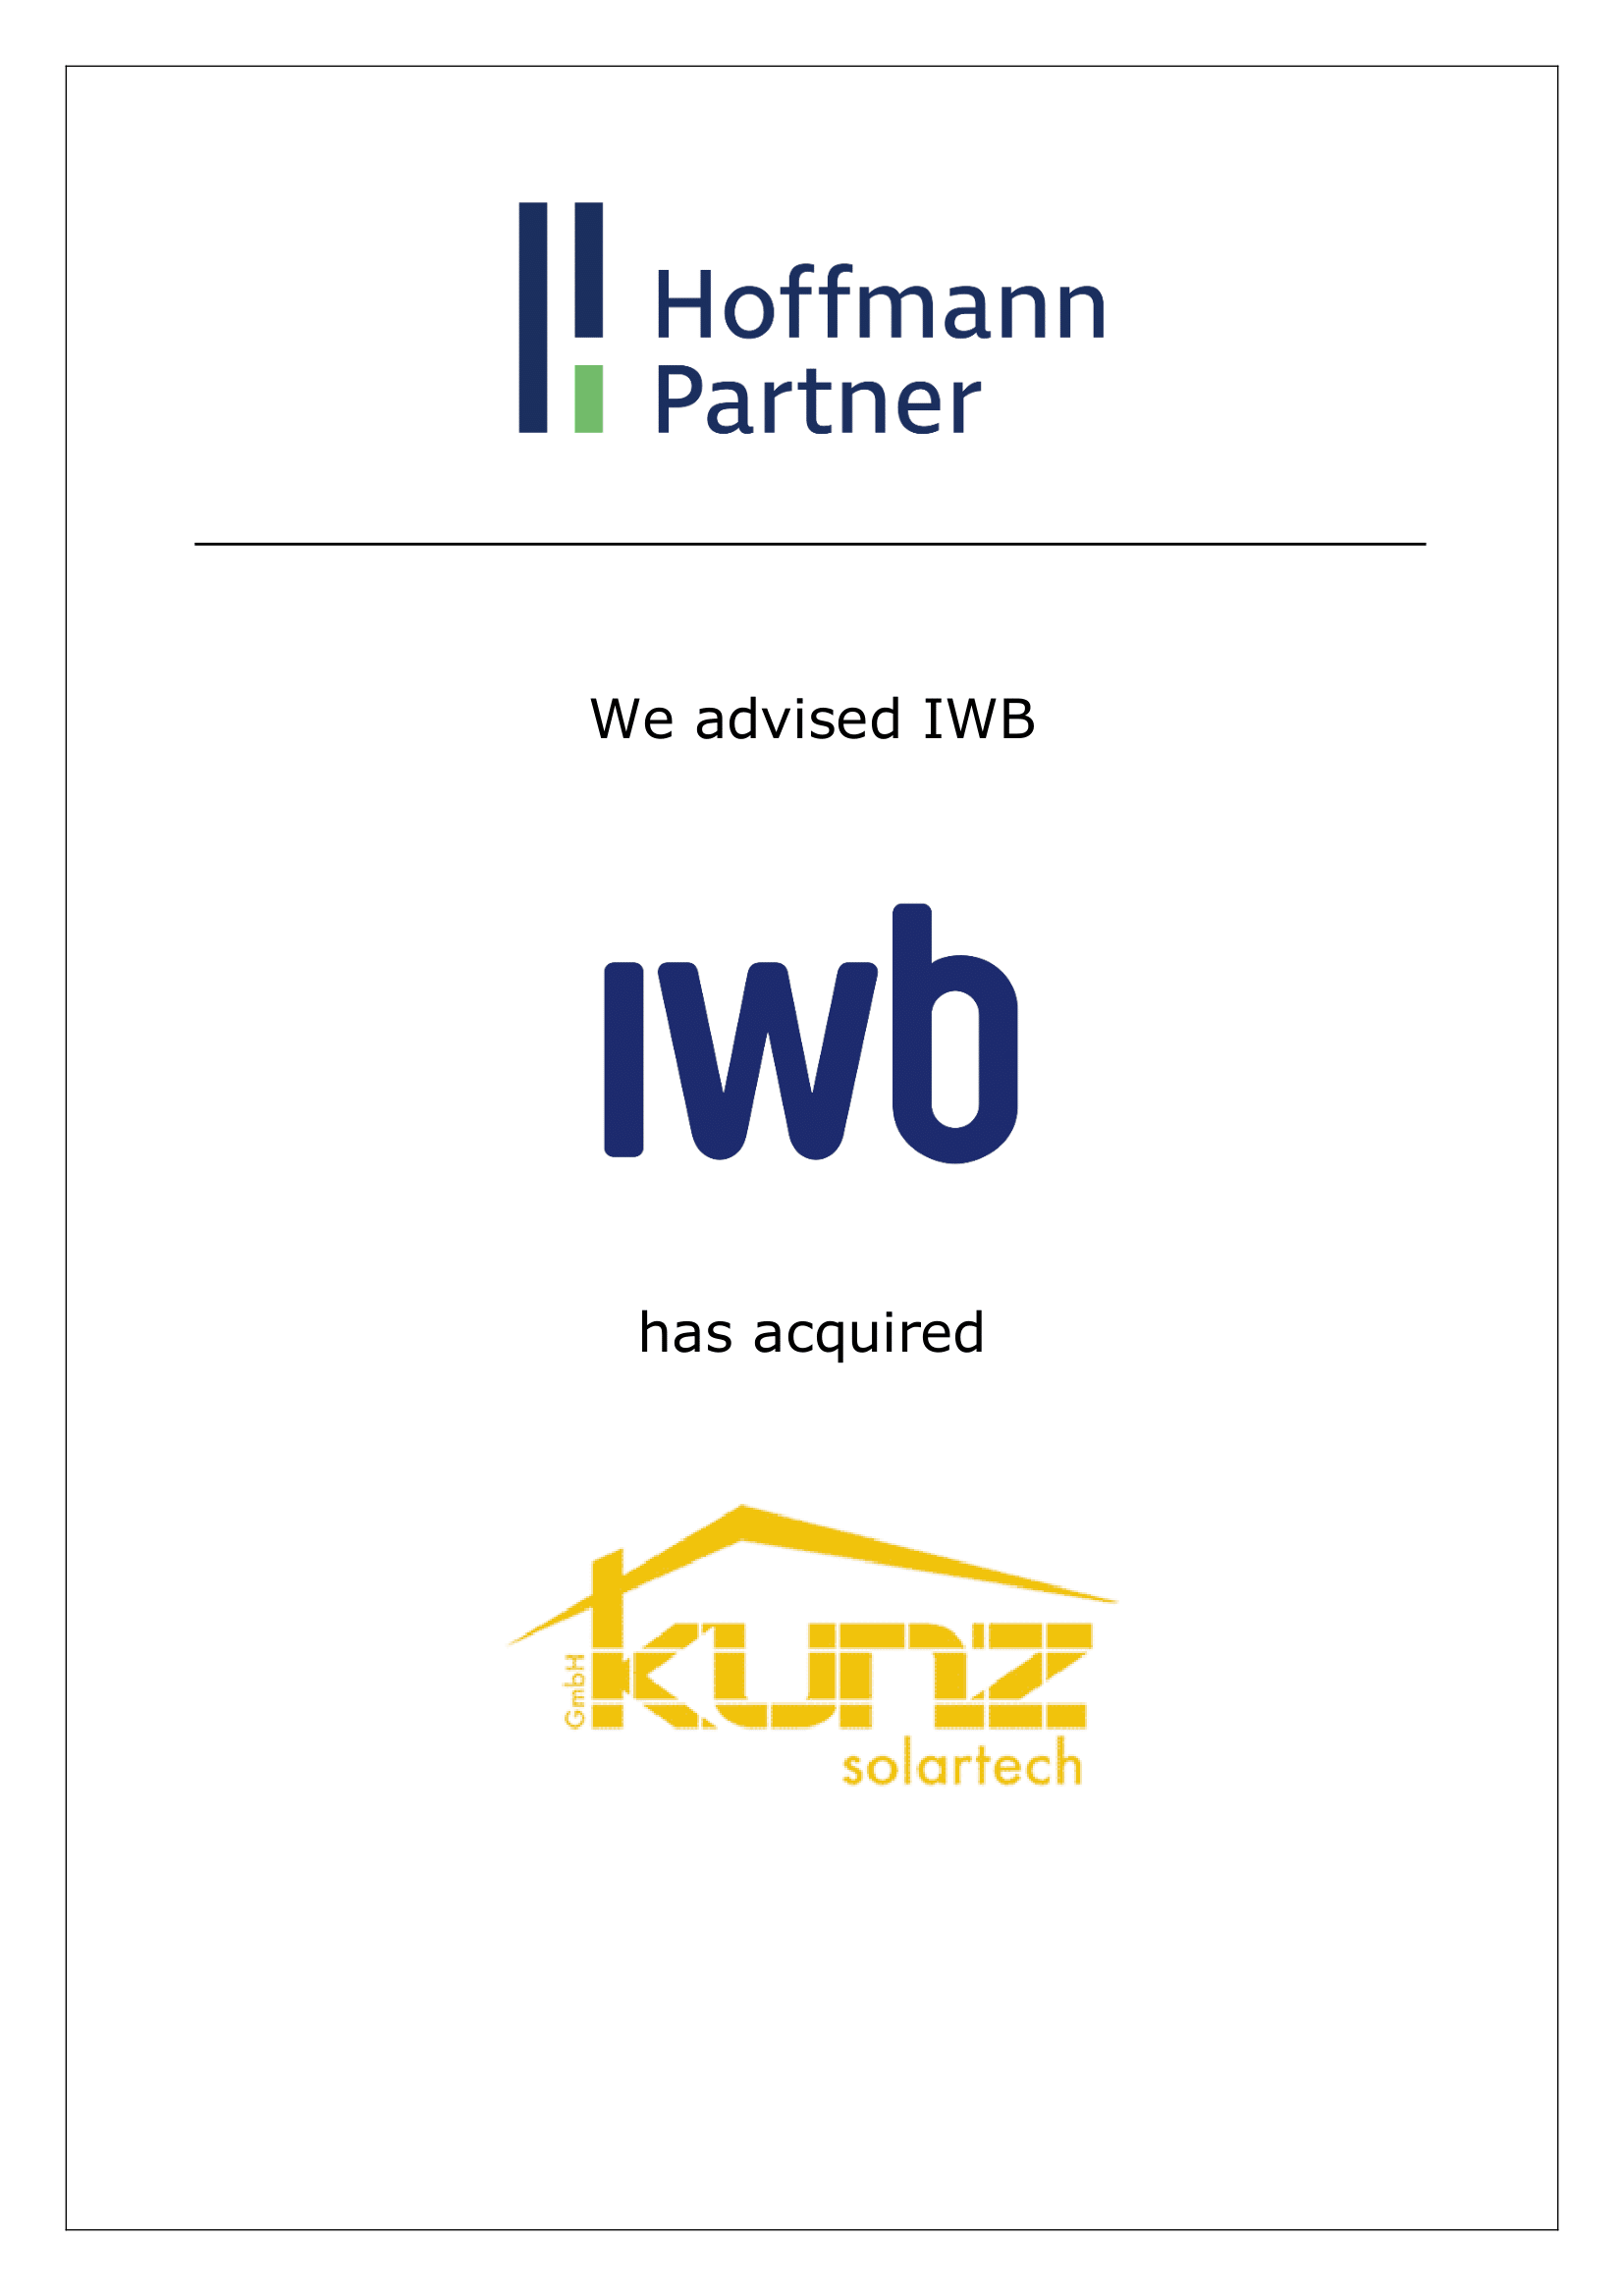 IWB - Kunz Solartech